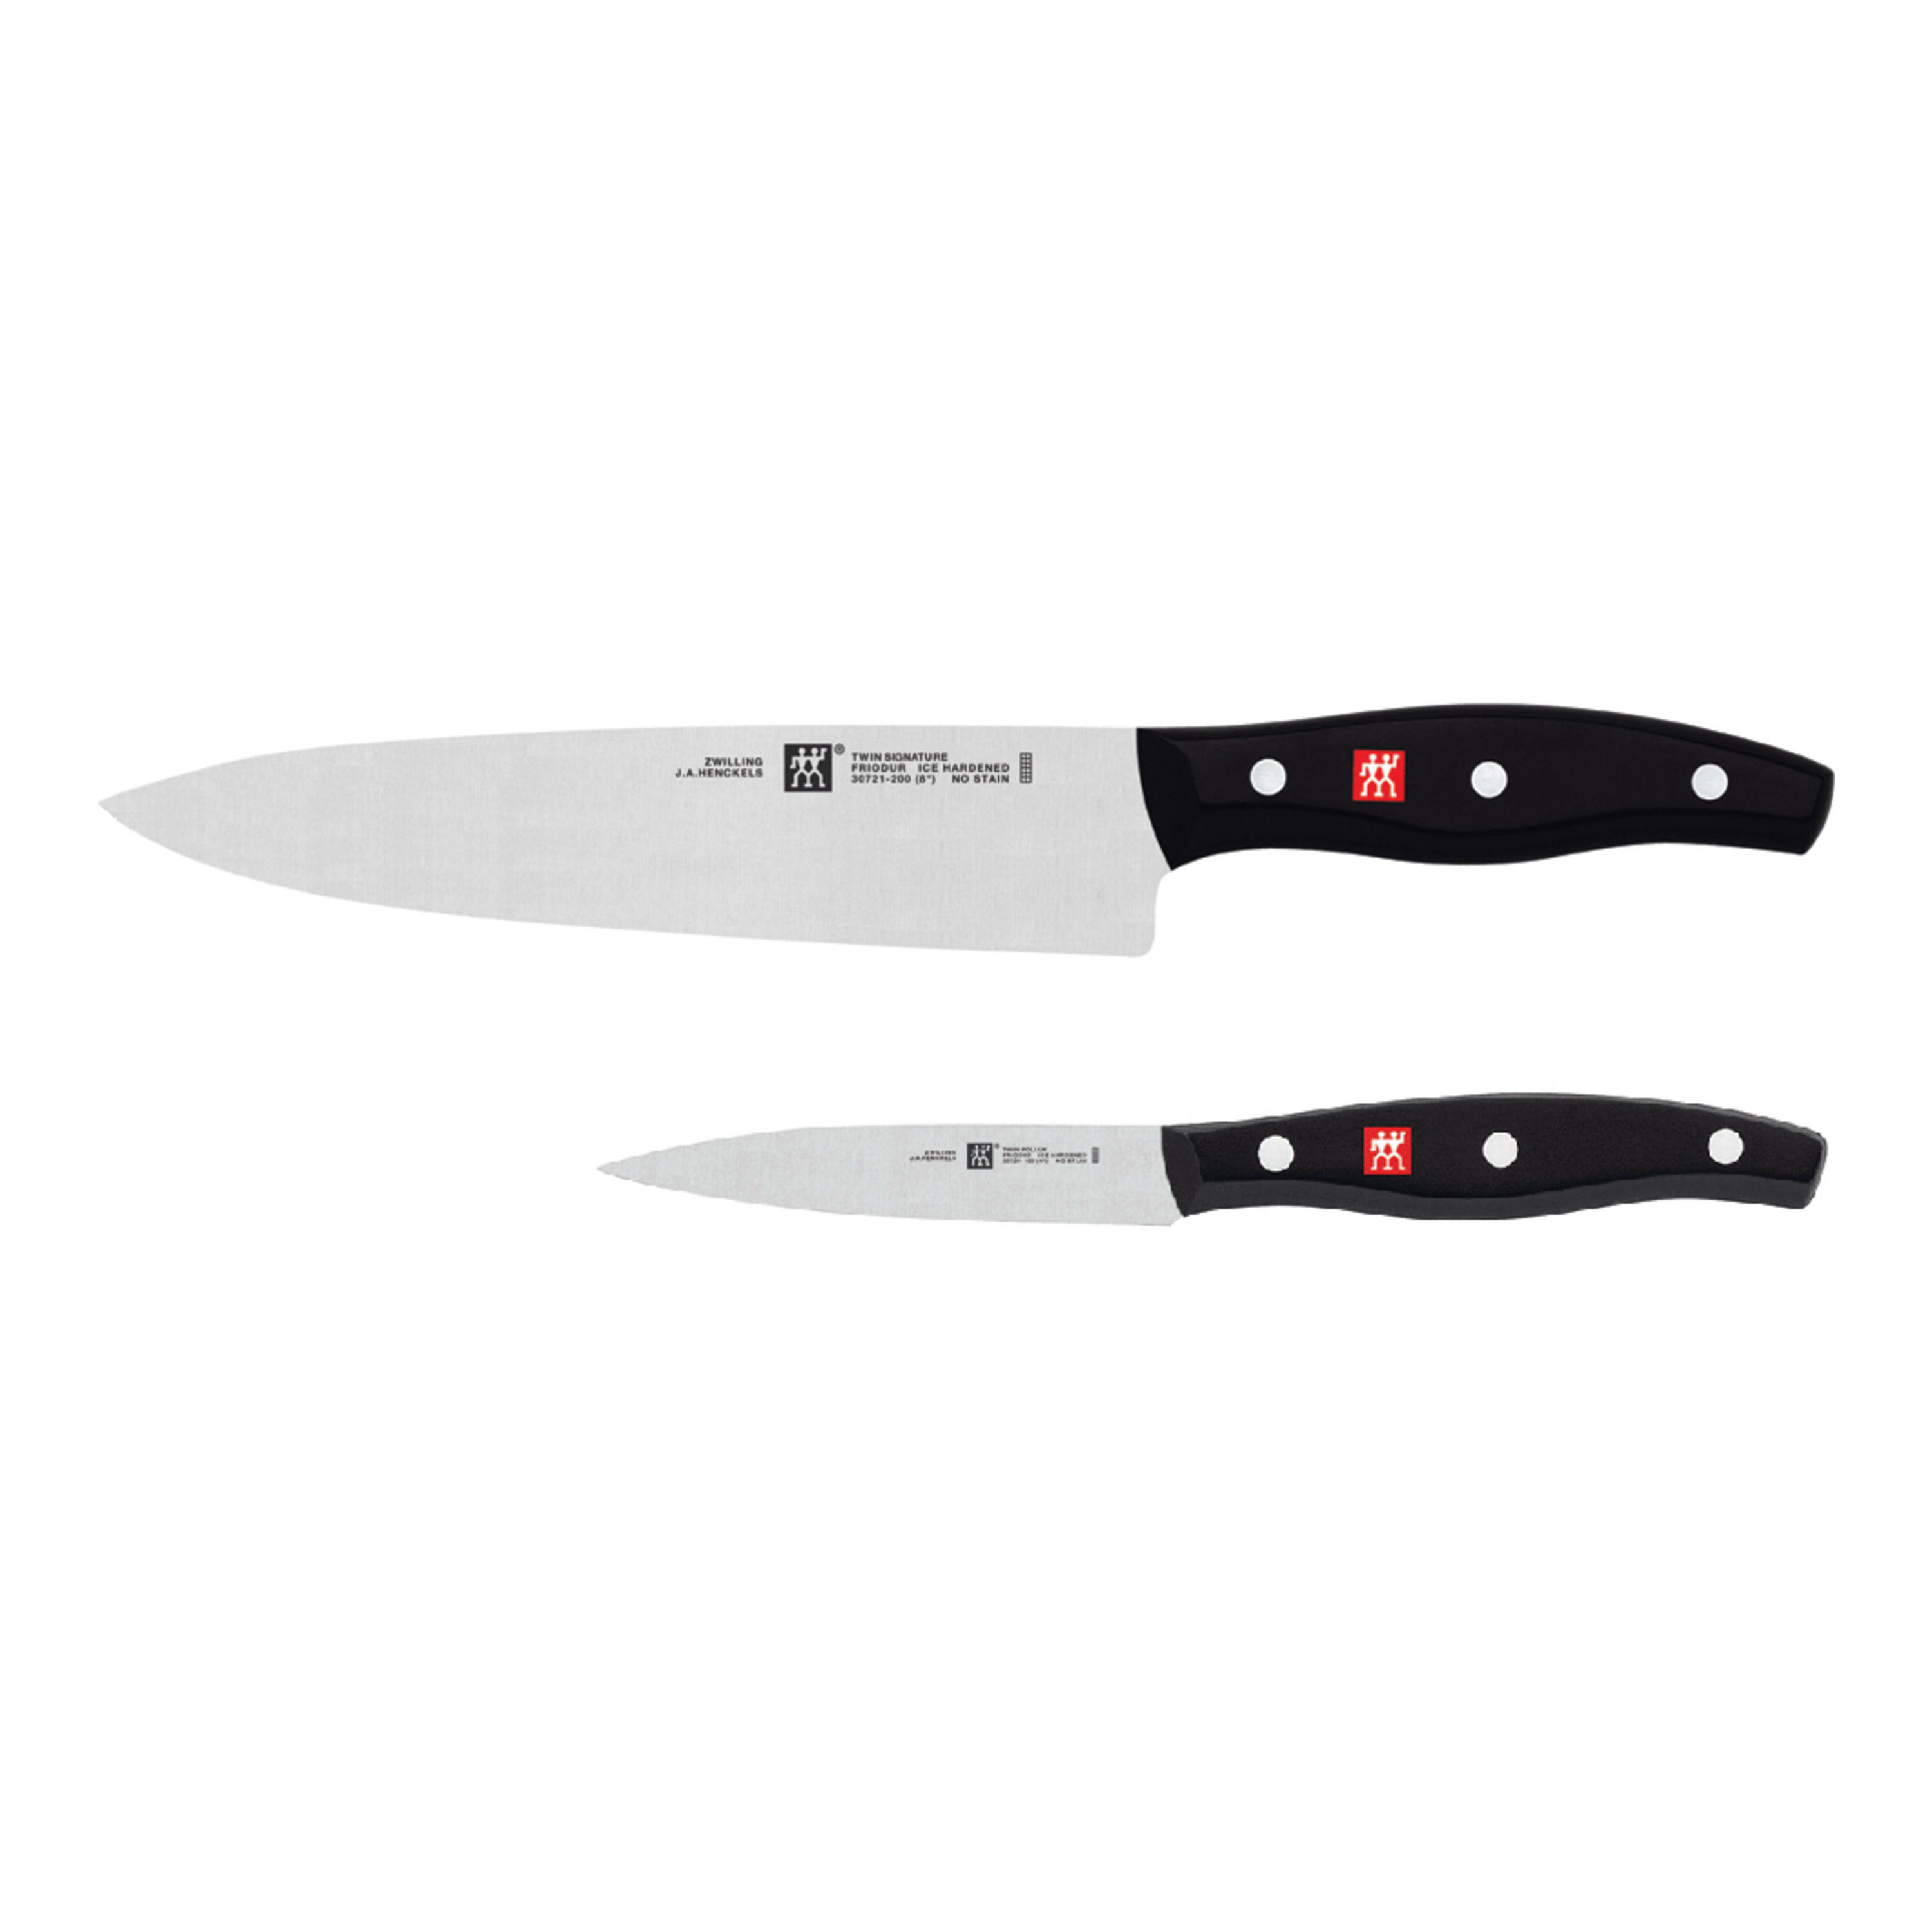 Signature ZWILLING TWIN Knife Buy set